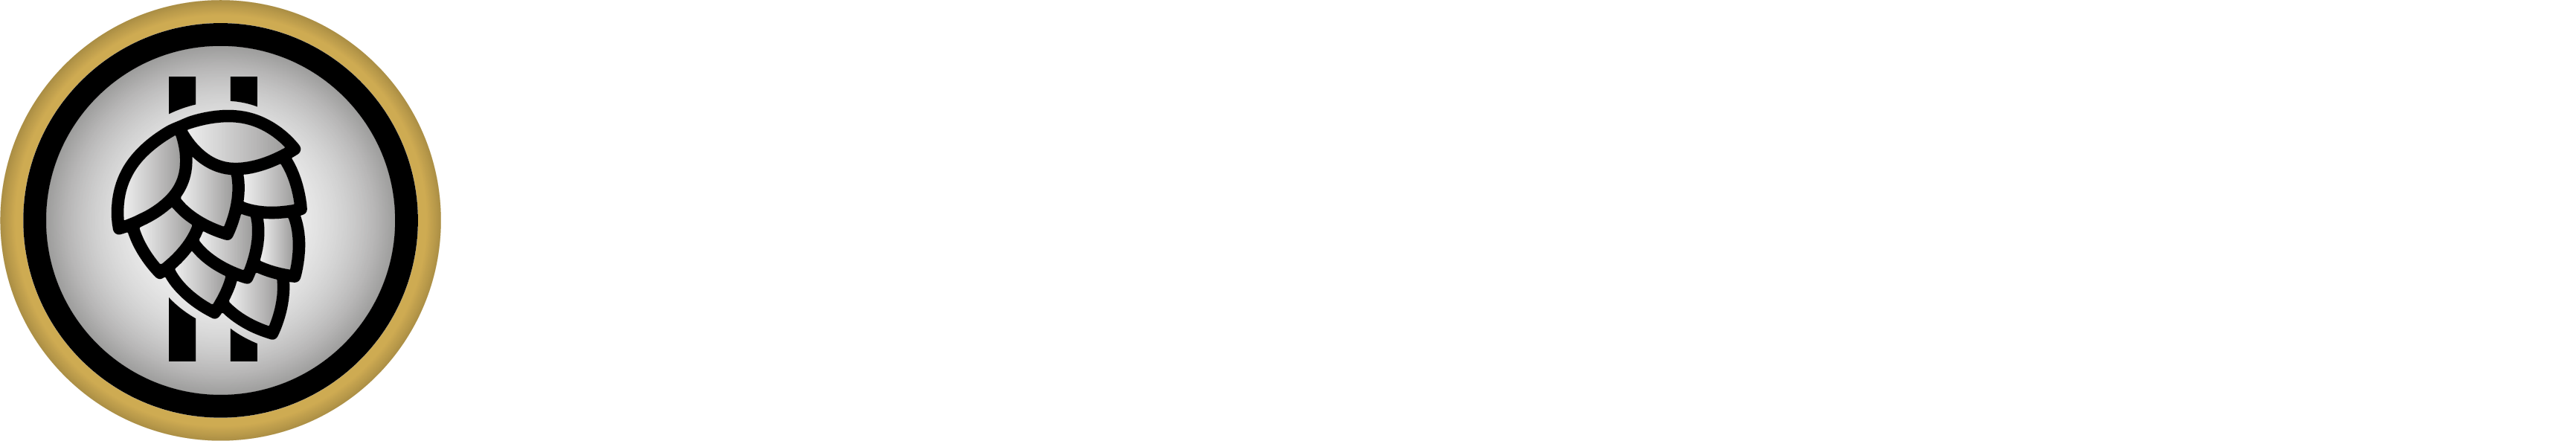 https://debiermarkt.nl/wp-content/uploads/2021/08/logo_de-biermarkt_witte_letters.png